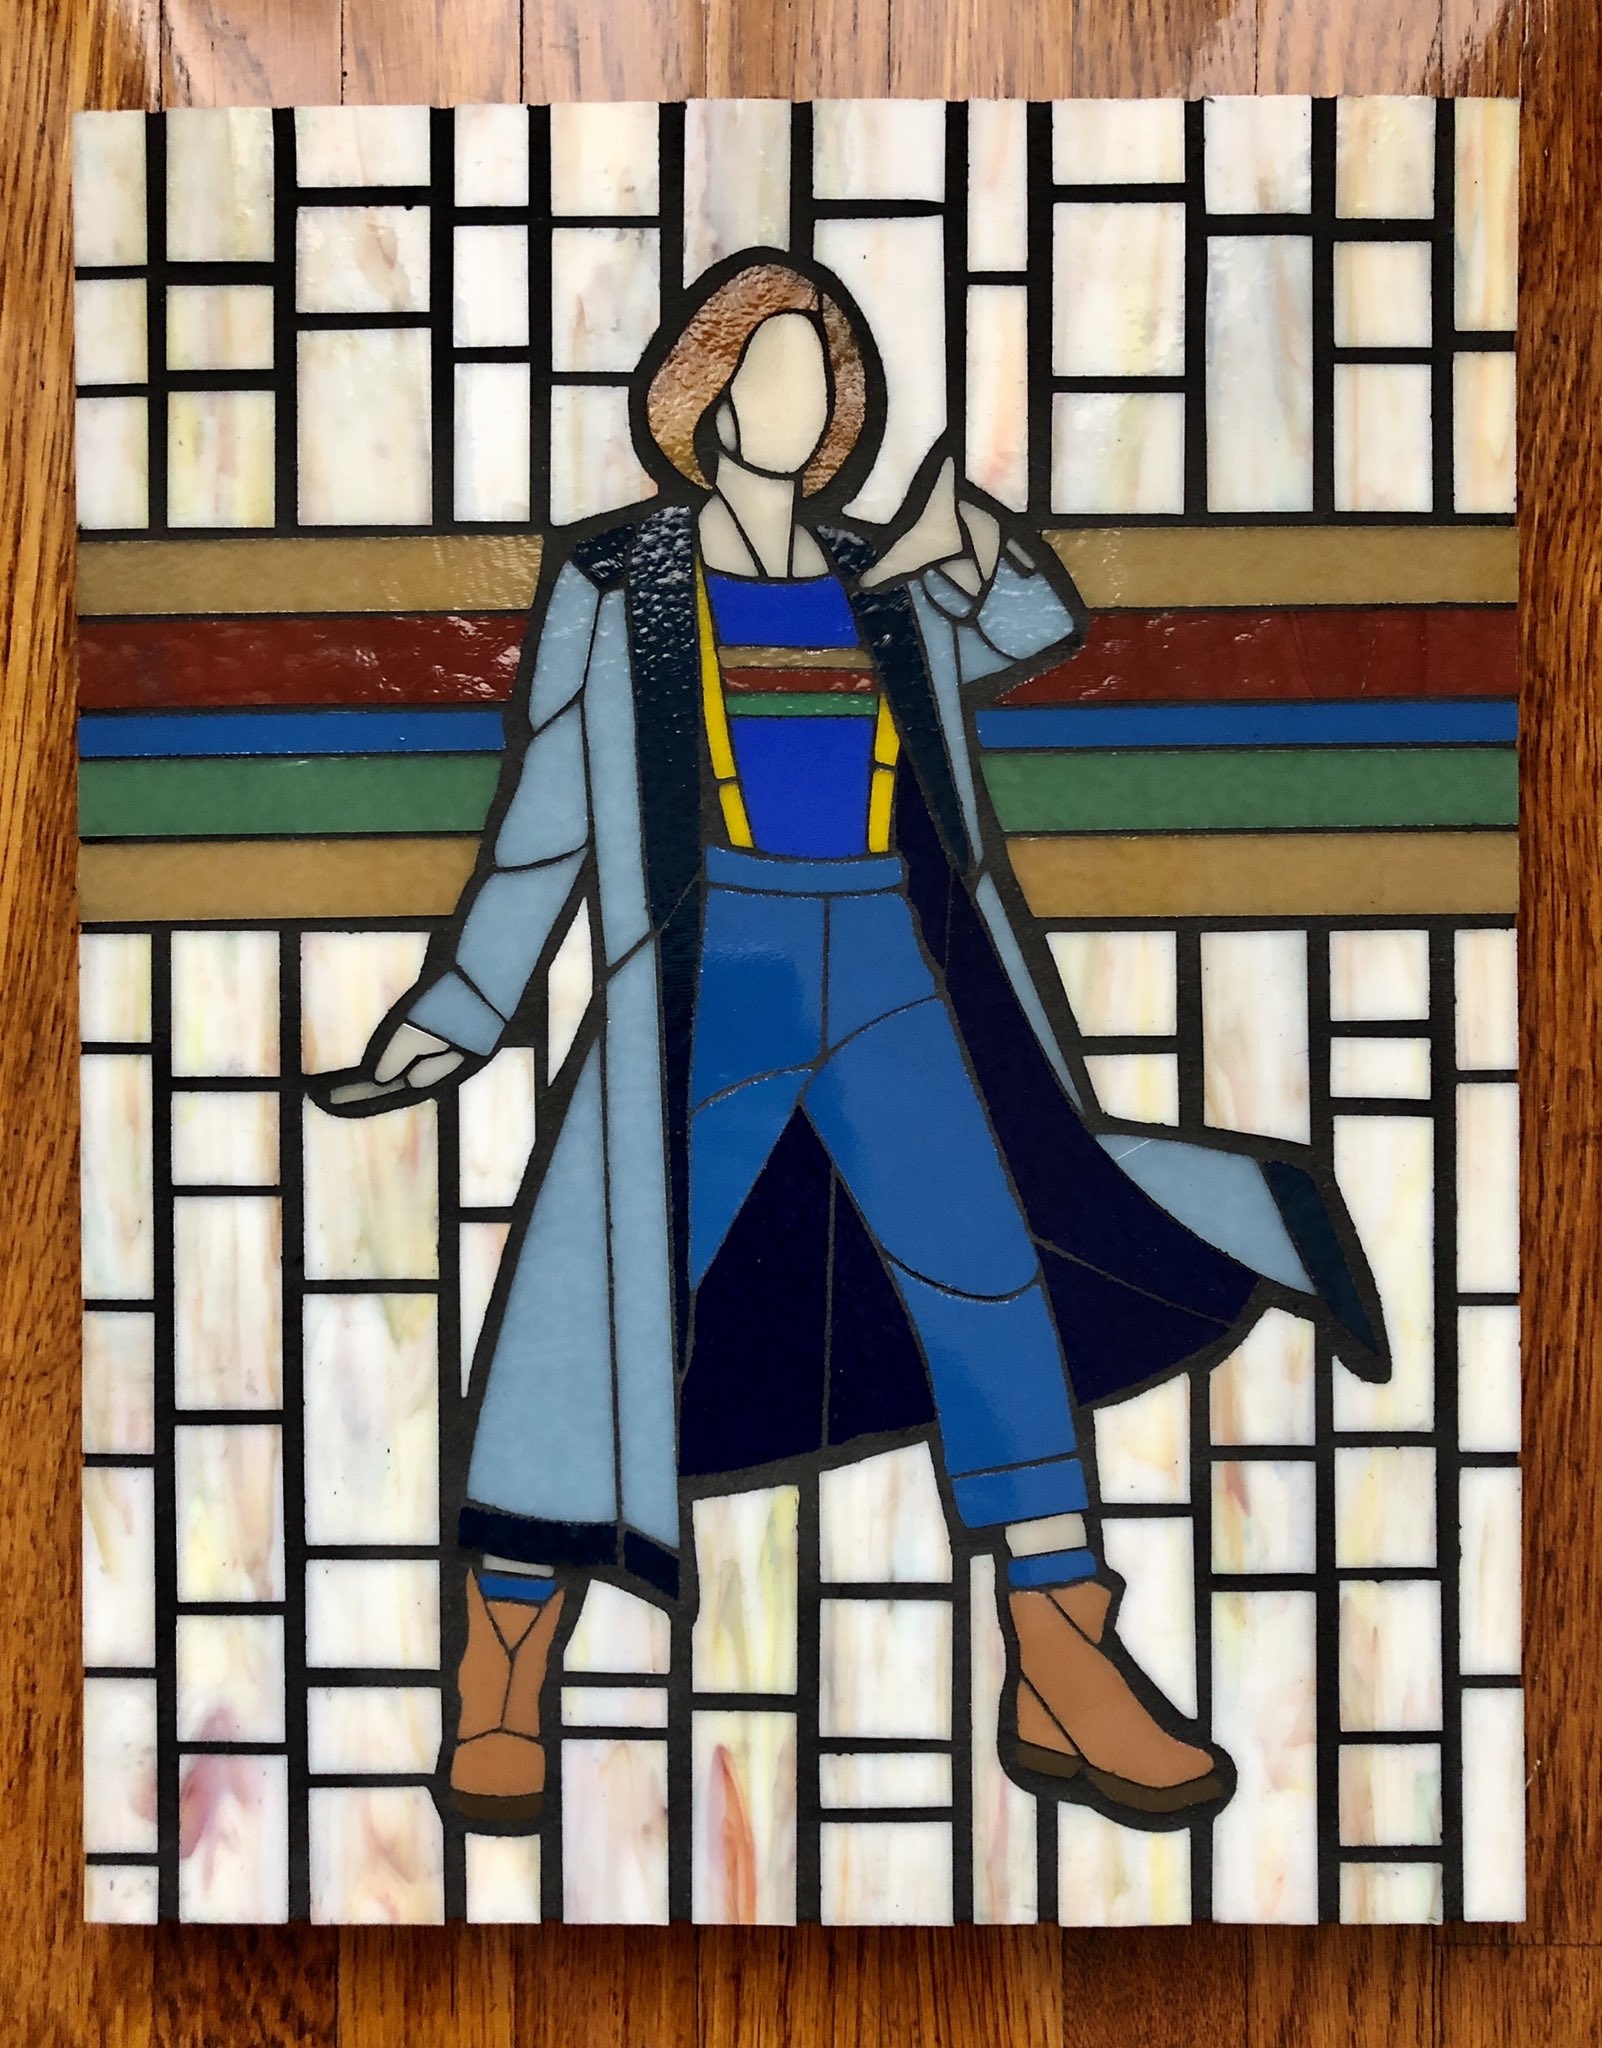 15 October: "Some amazing stained glass mosaic art for #FanArtFriday! 💎 🖌️: @katjetson"[23]